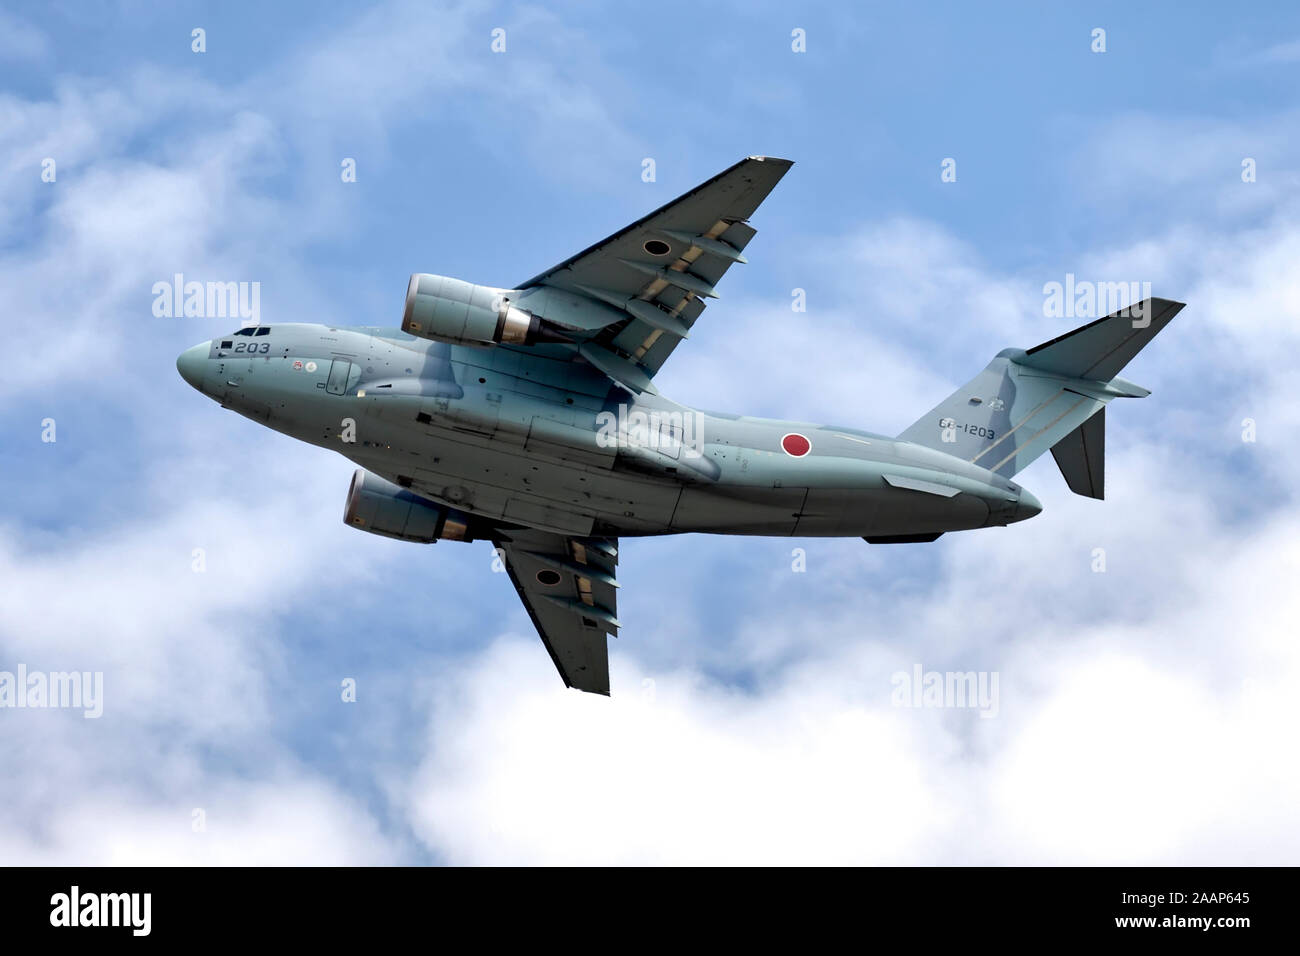 Un Giappone Aria forza di autodifesa Kawasaki C-2, da 3 Yuso Hikotai, n. di serie 68-1203 (204) prende il largo al Royal International Air Tattoo Foto Stock